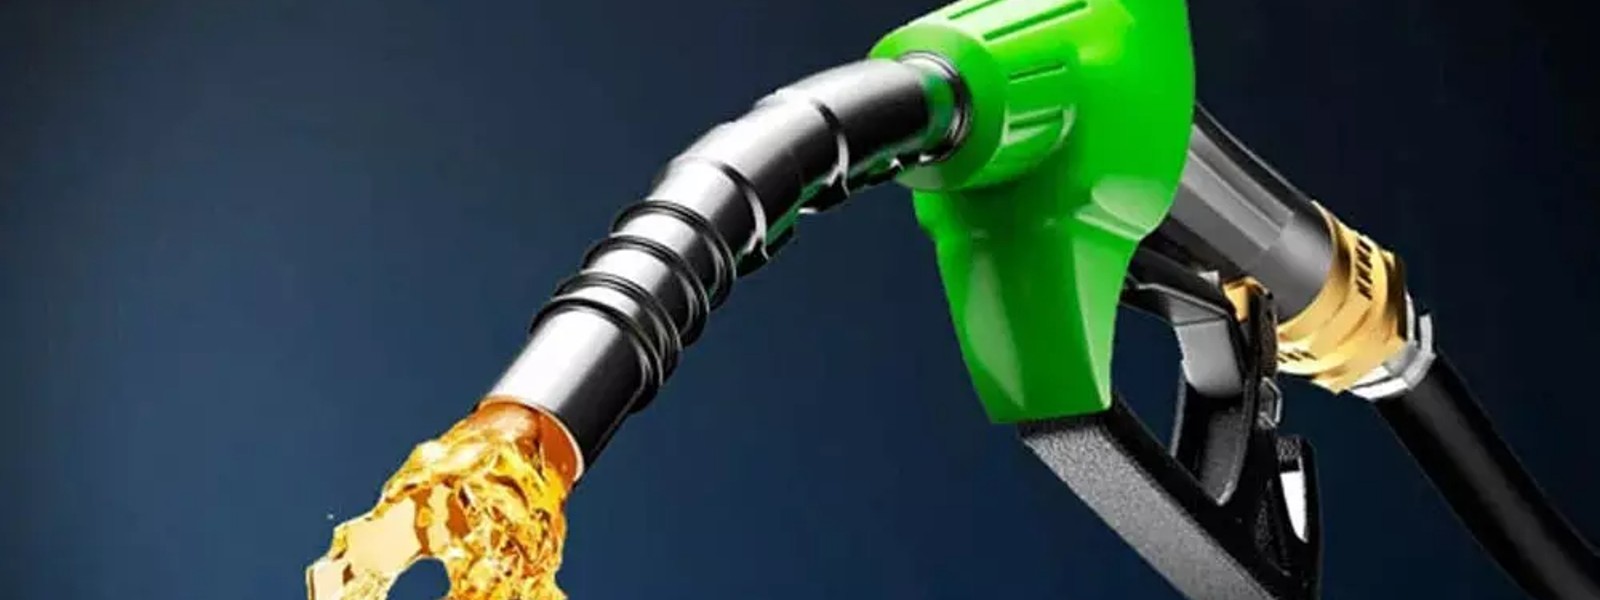 Fuel Imports: Petrol 95 cheaper than Petrol 92?